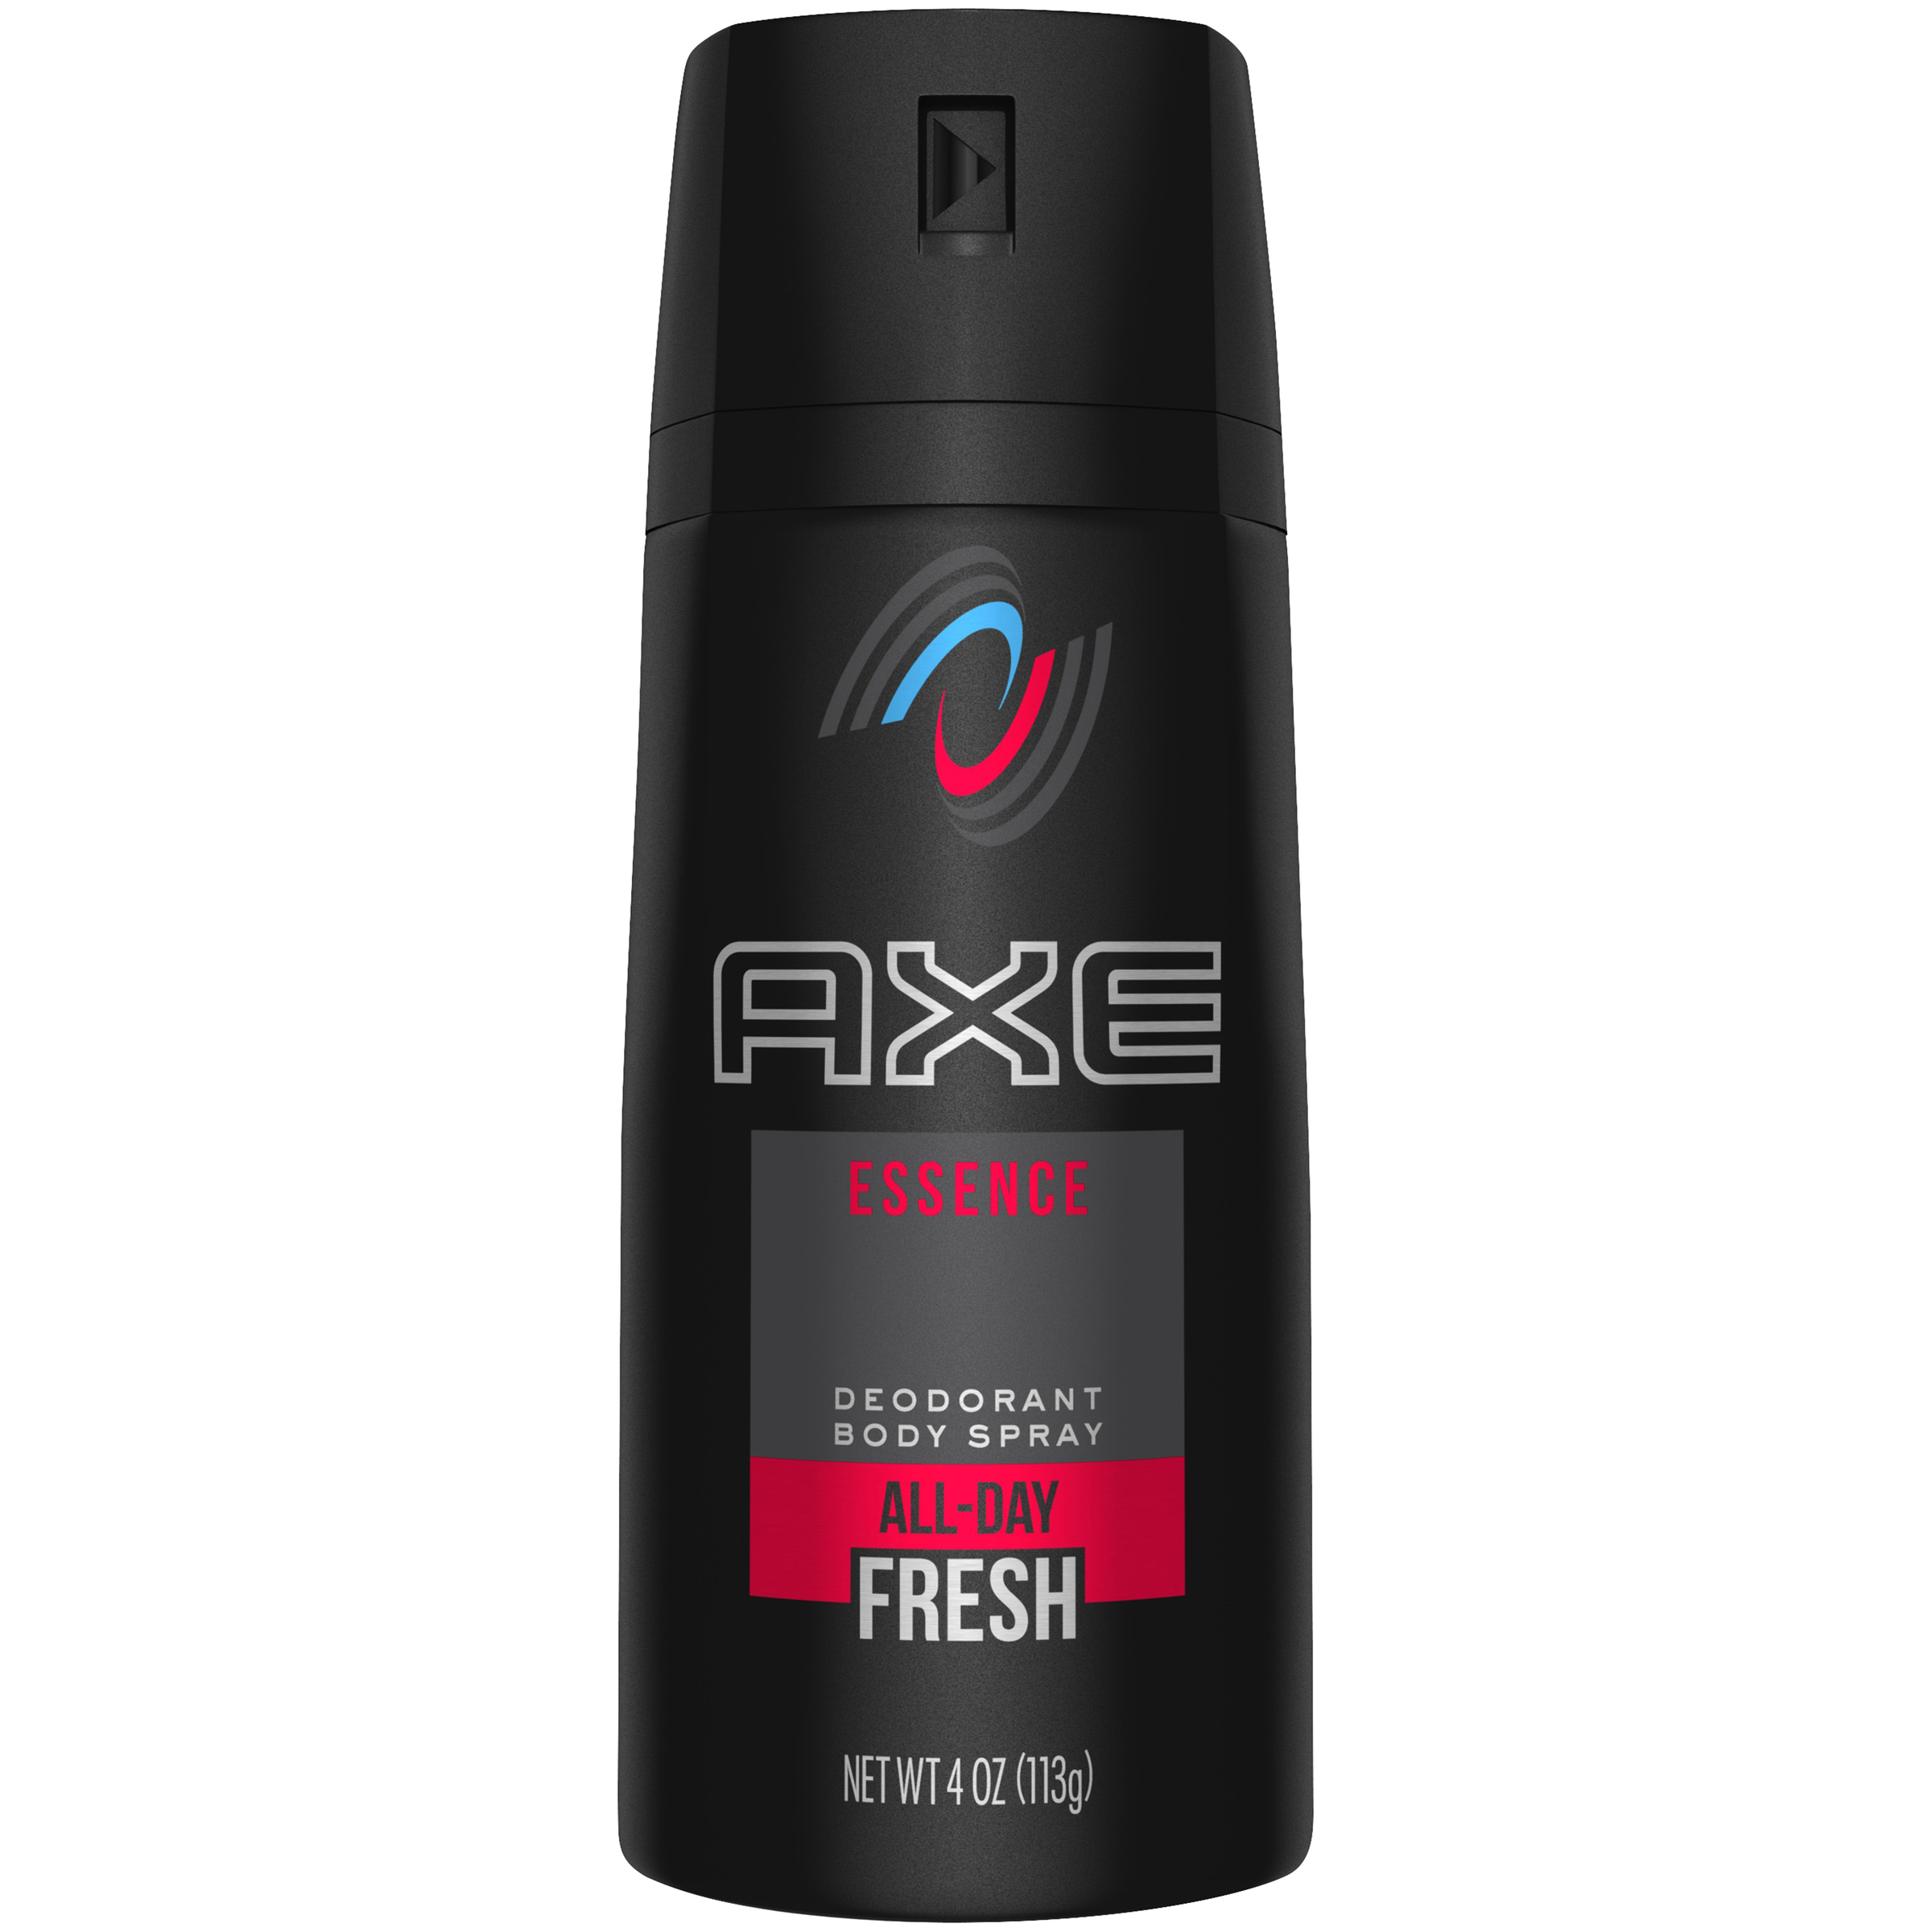 AXE Deodorant Bodyspray, Essence, 4 oz (113 g)